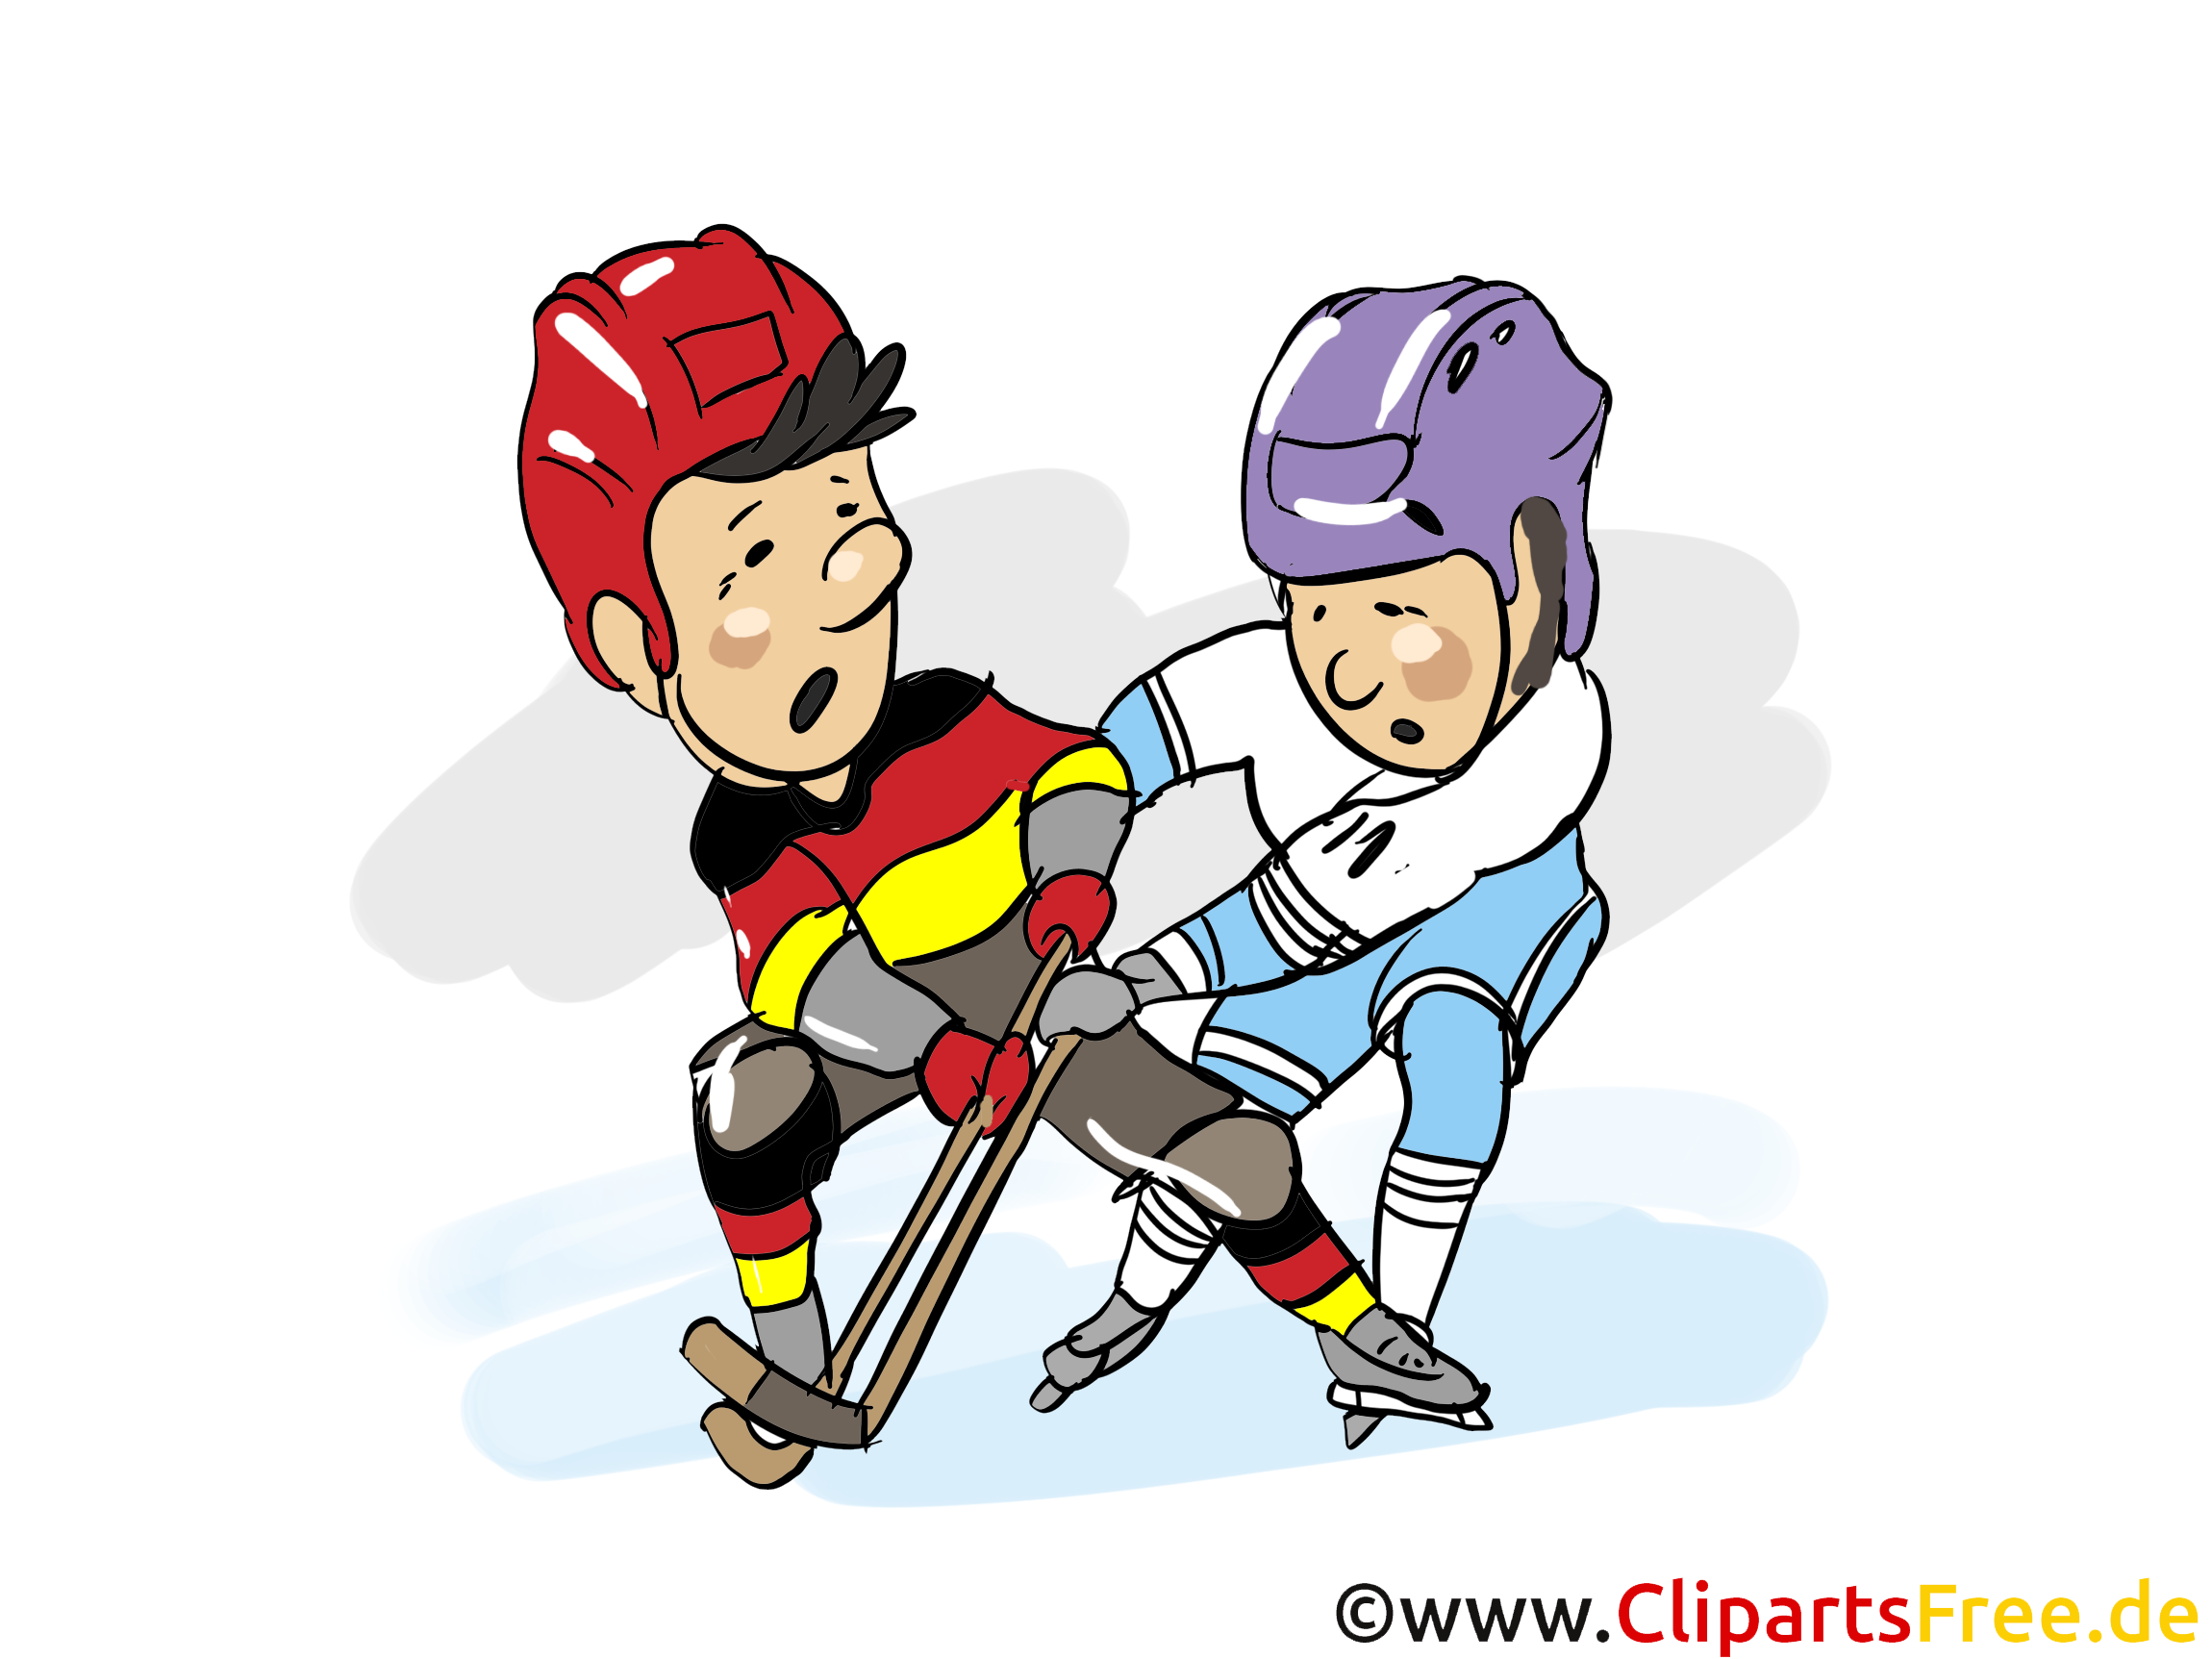 Hockeyeurs dessins gratuits - Hockey clipart